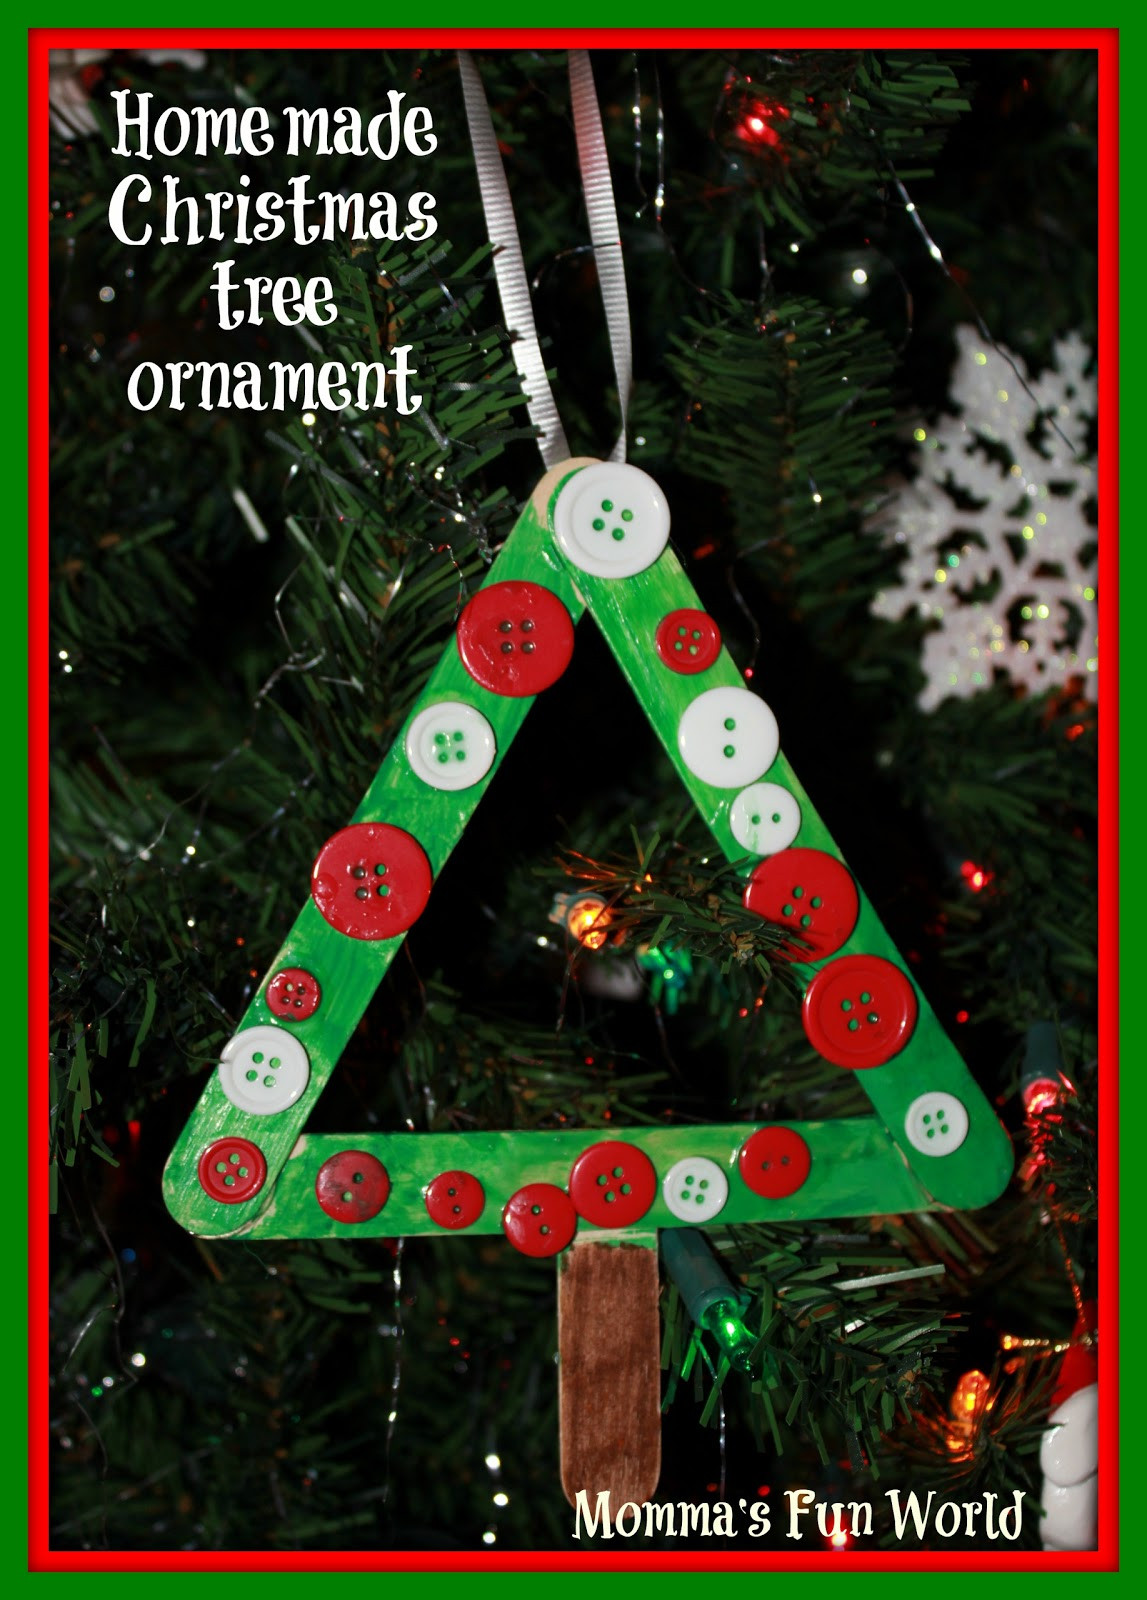 Preschool Christmas Ornament Craft Ideas
 Momma s Fun World Popscile stick Christmas tree ornament